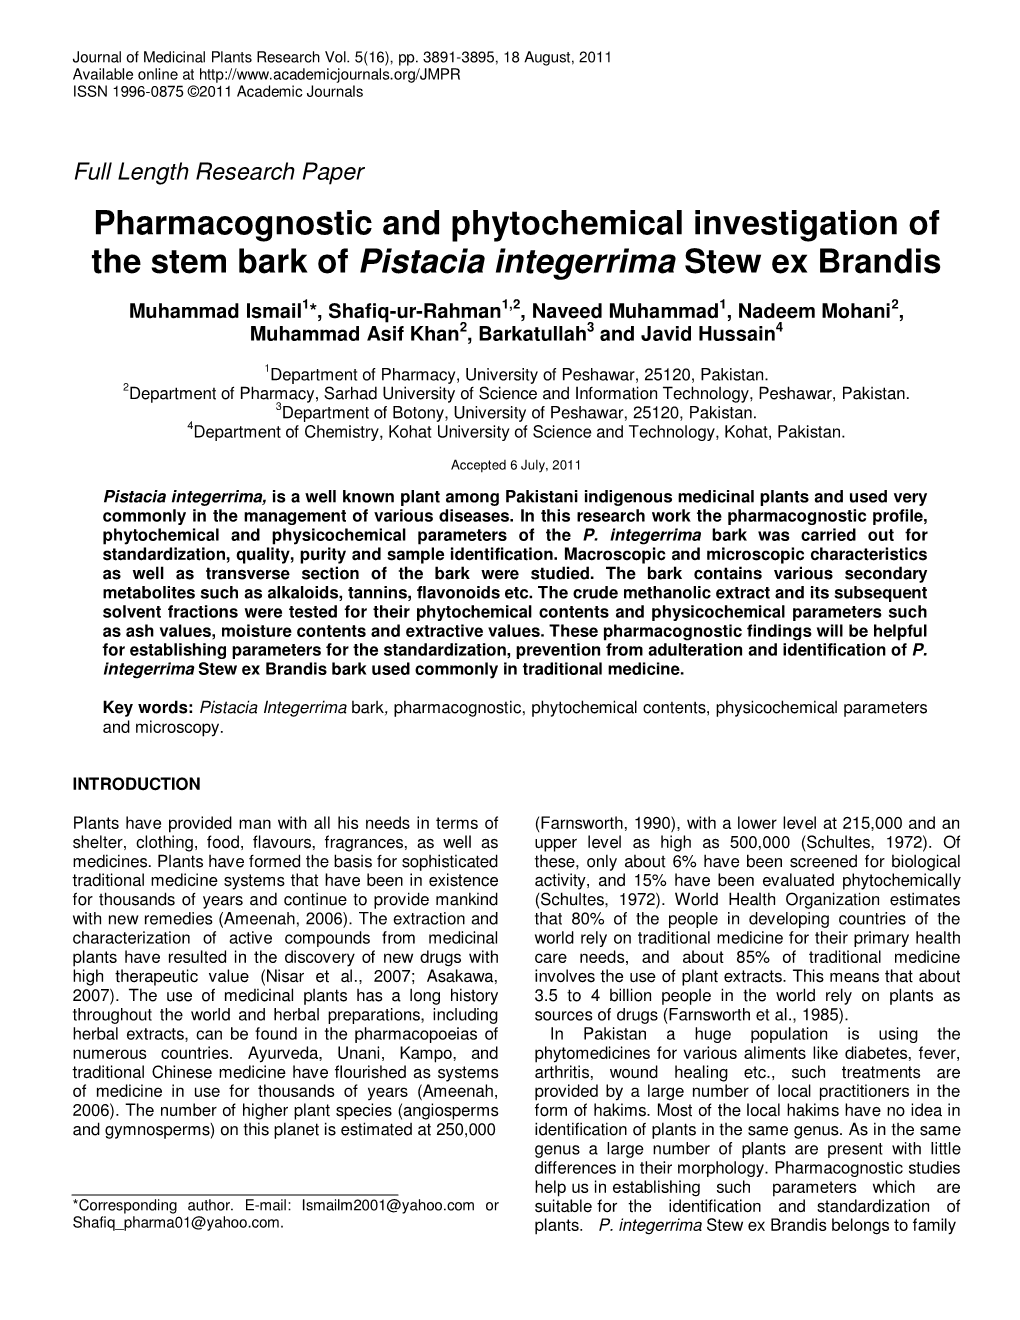 Pharmacognostic and Phytochemical Investigation of the Stem Bark of Pistacia Integerrima Stew Ex Brandis